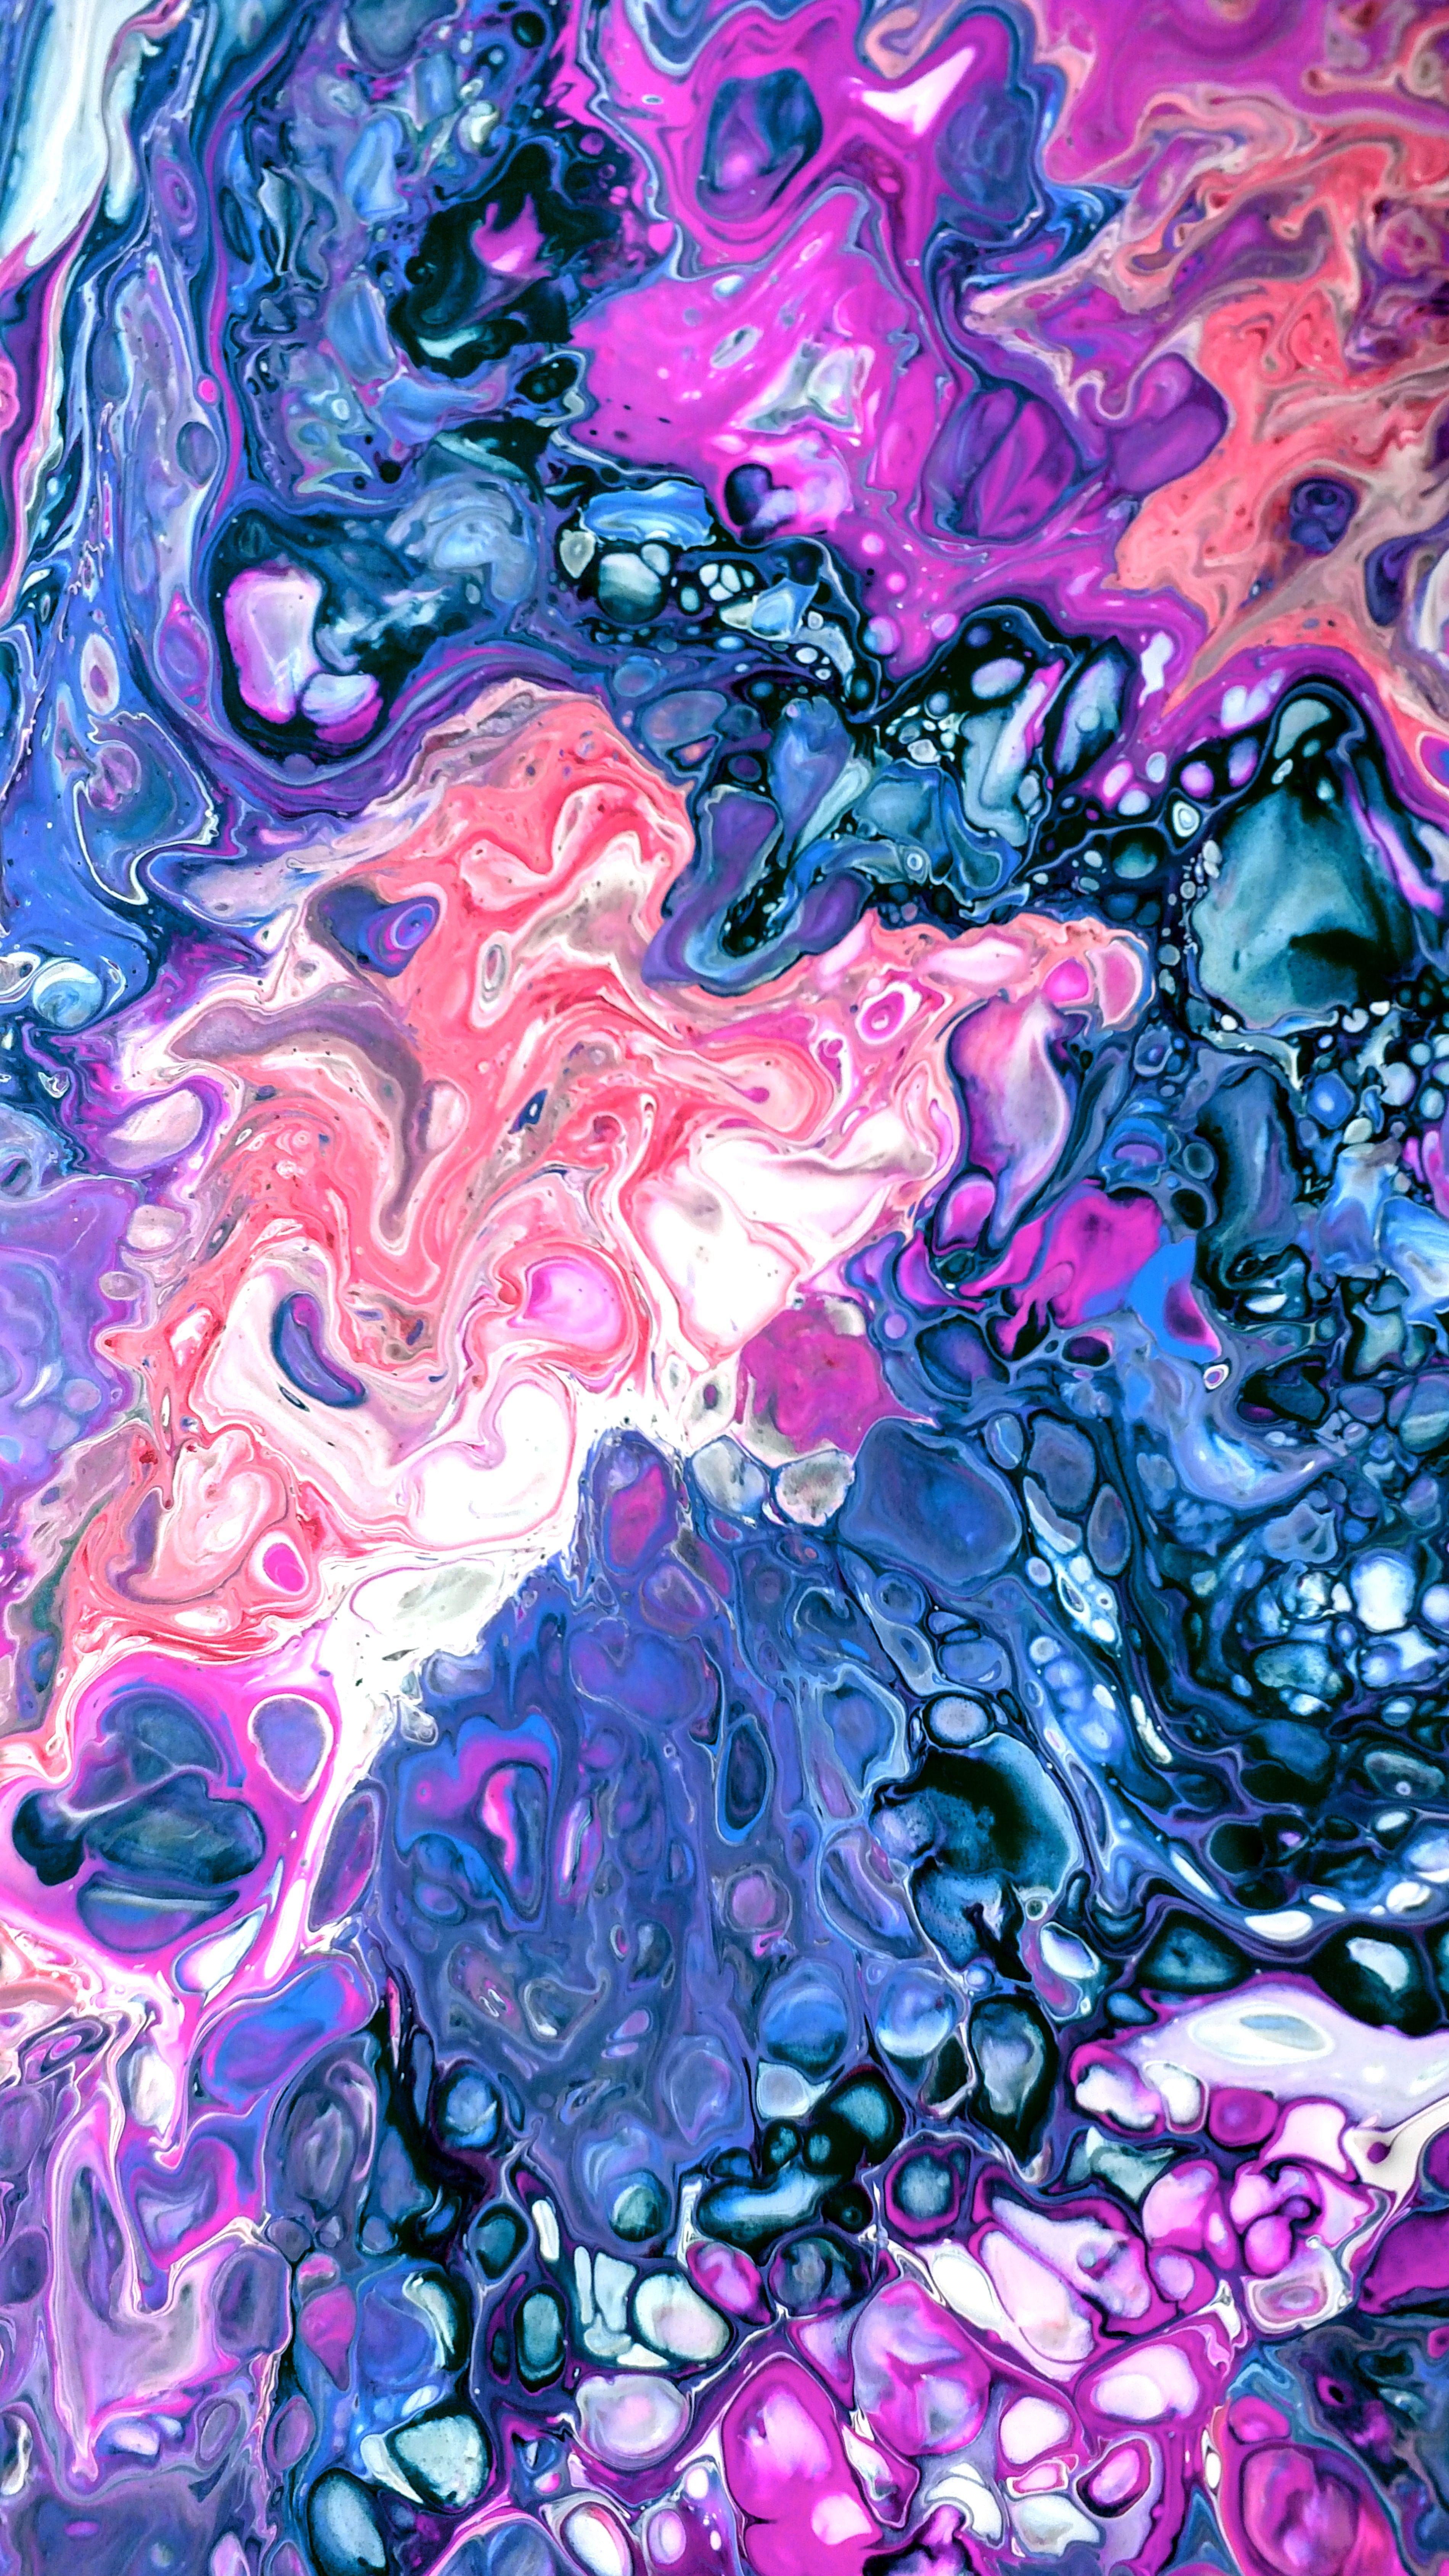 Fun colors in a fluid pour painting #originalart. Colorful